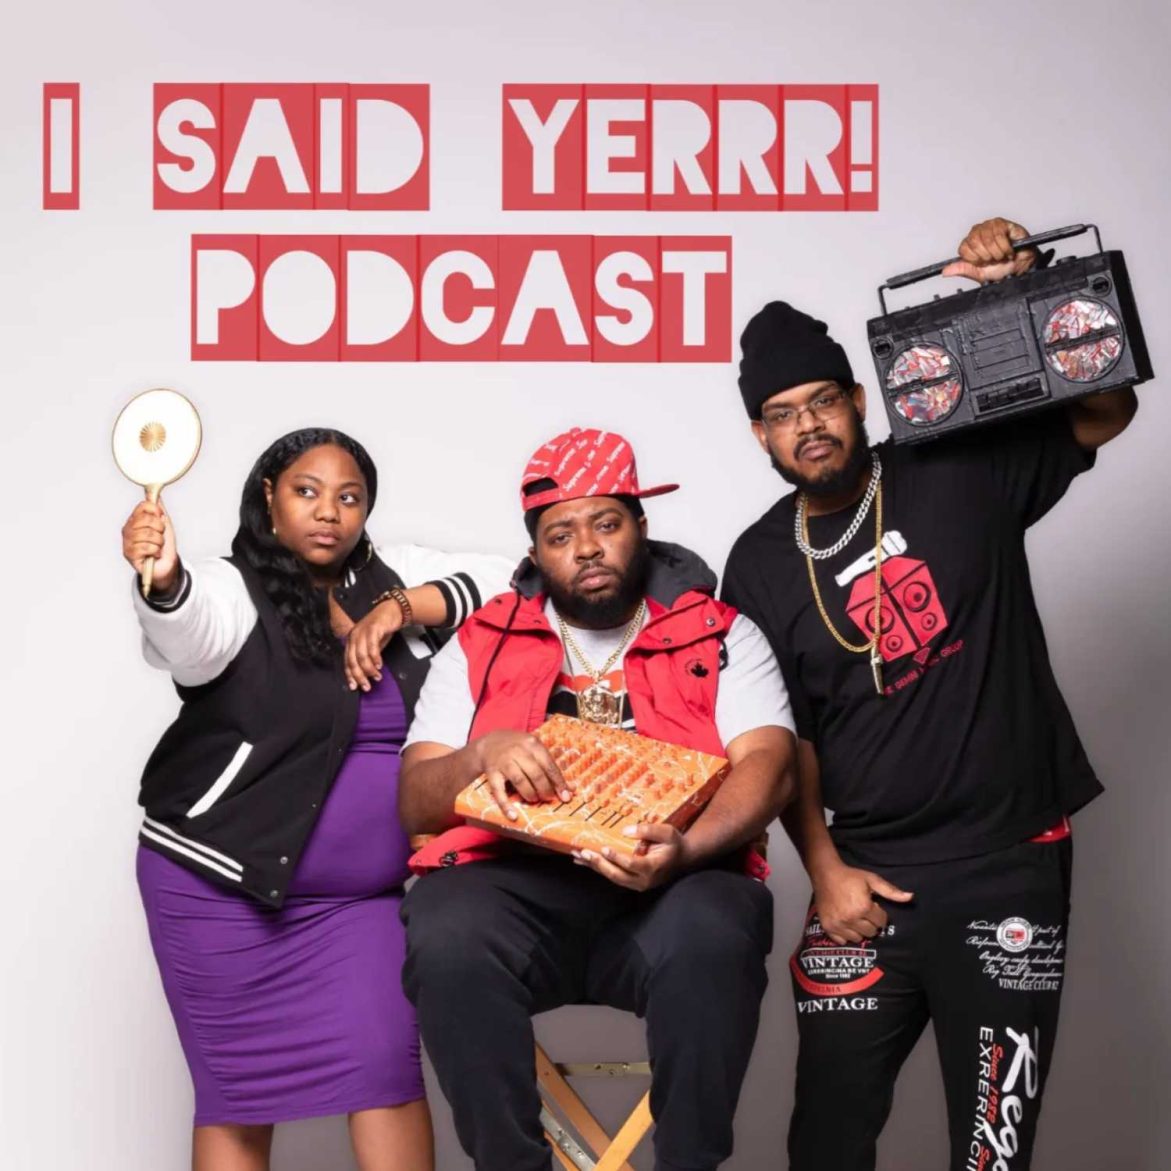 Black Podcasting - I Said Yerrr! Podcast EP56 - "Her Loss"